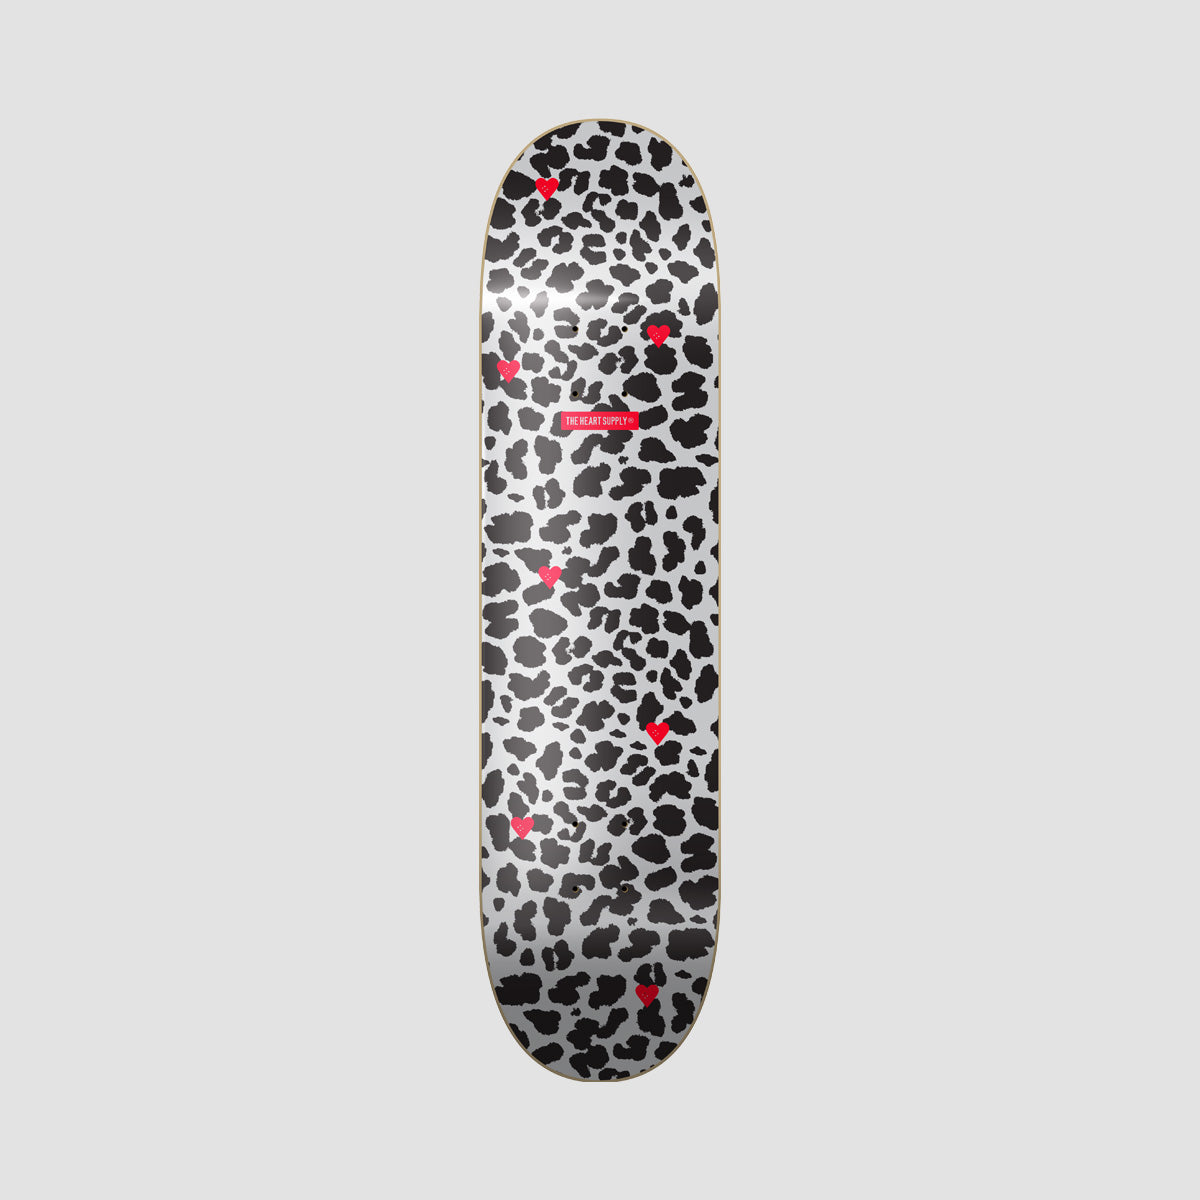 The Heart Supply Luxury Cheetah Skateboard Deck Black/White - 8"